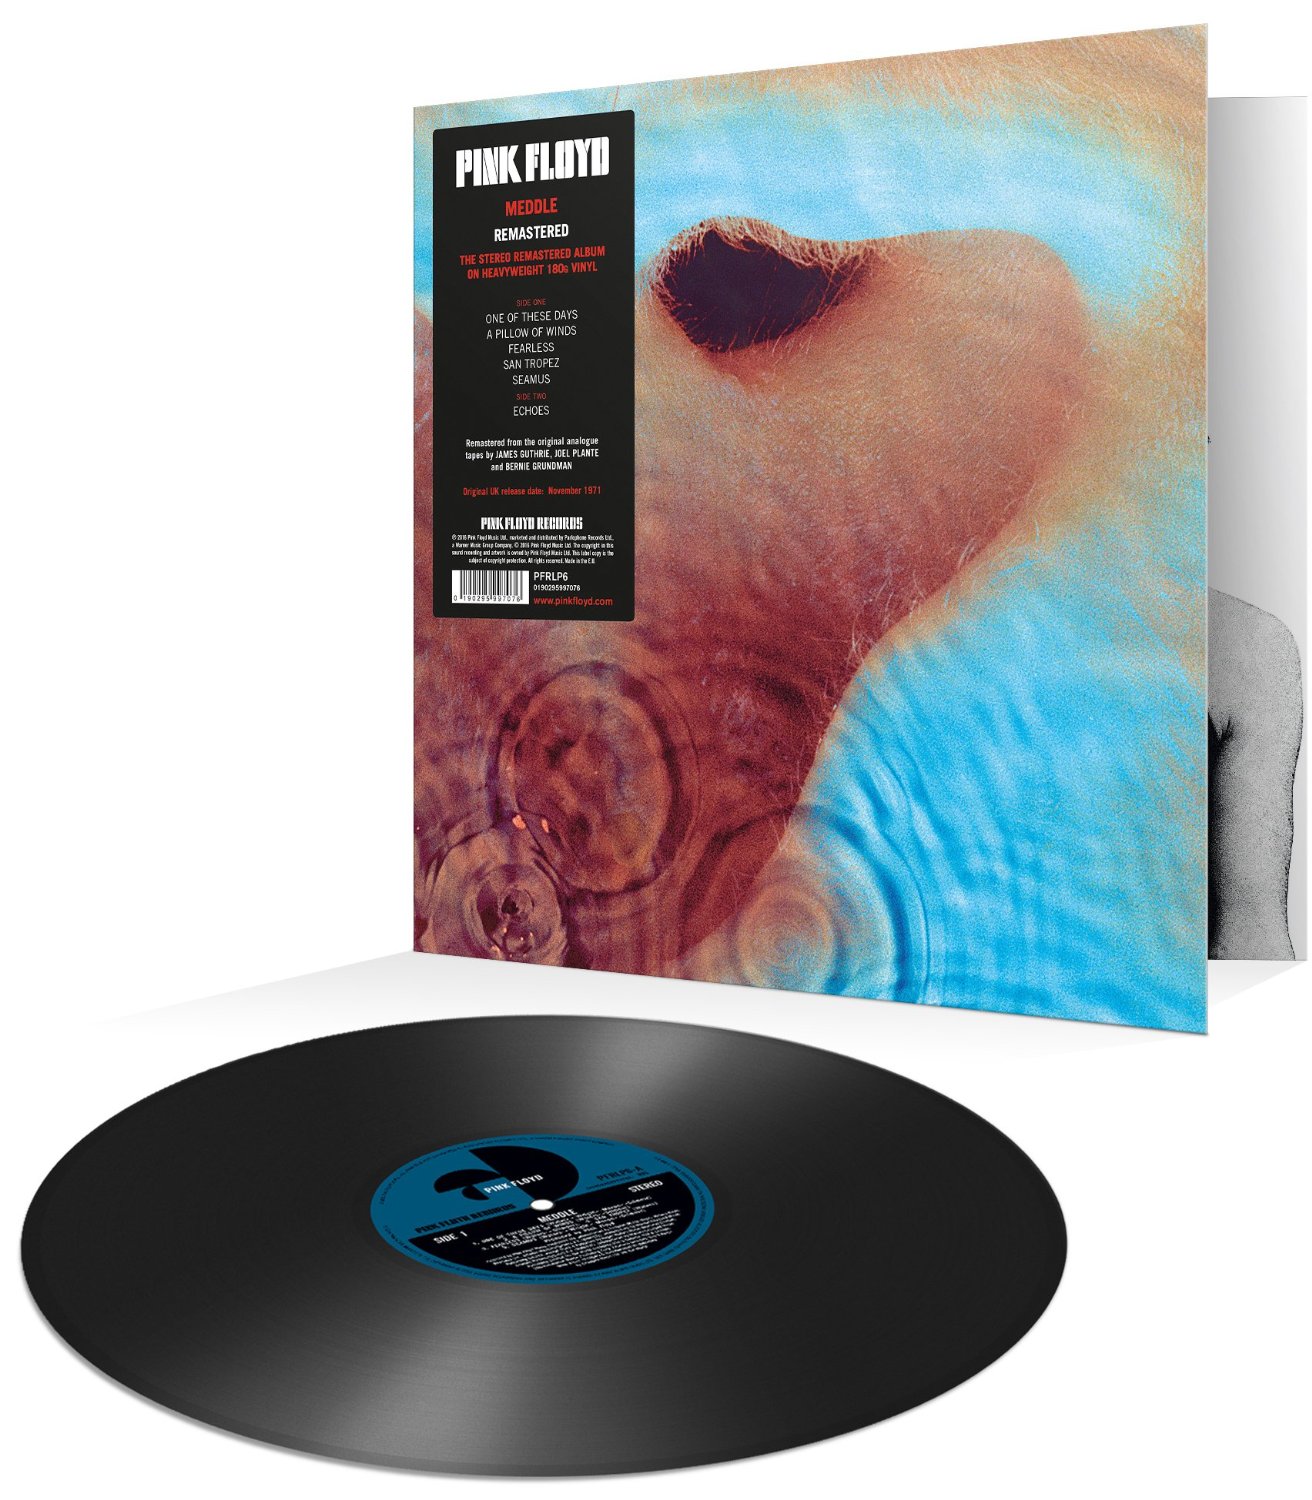 Pink Floyd "Meddle" Vinyl